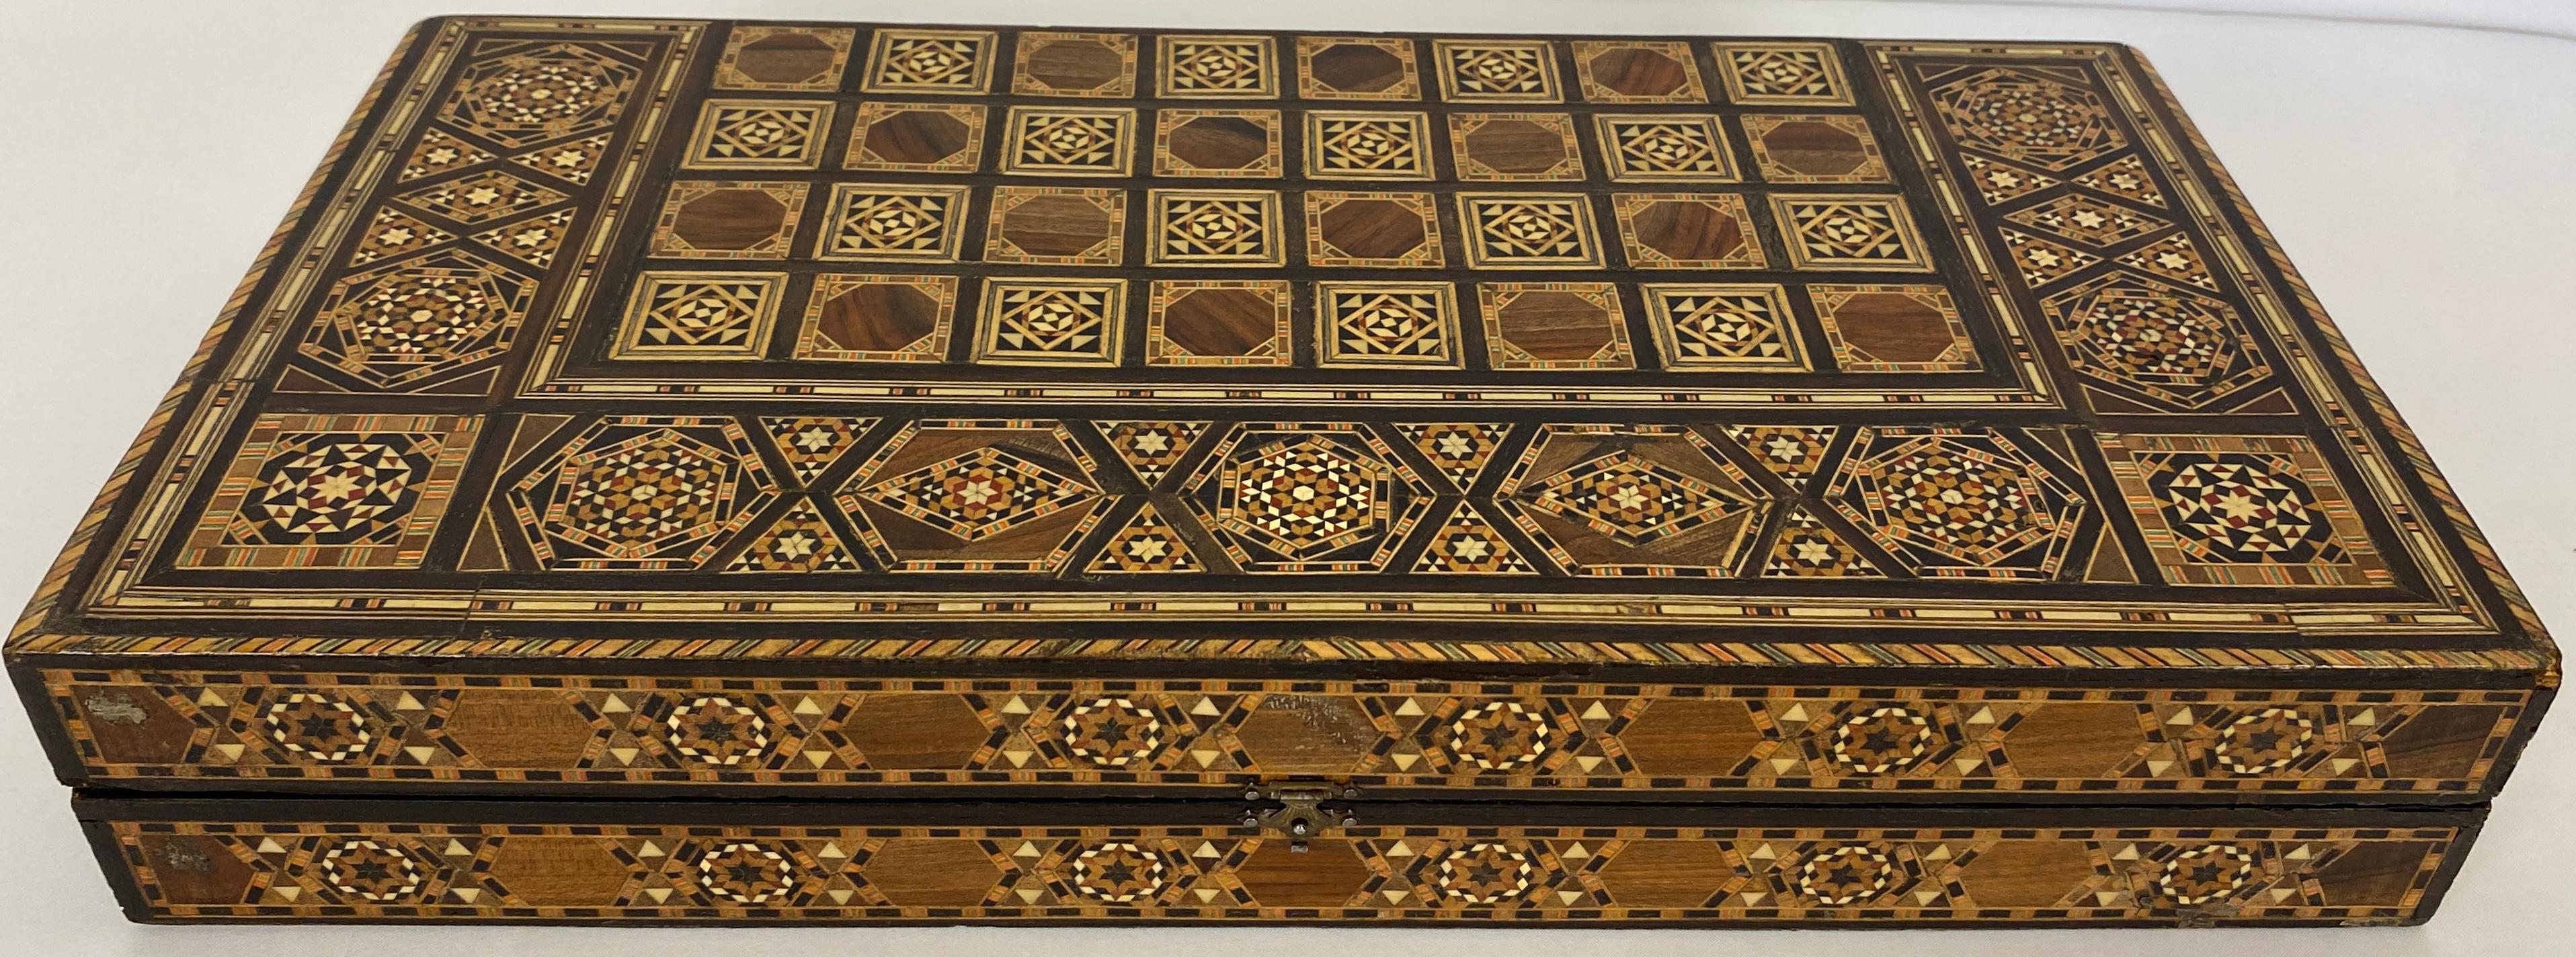 Syrian Mosaic Wooden Inlaid Marquetry Box Backgammon Set 1